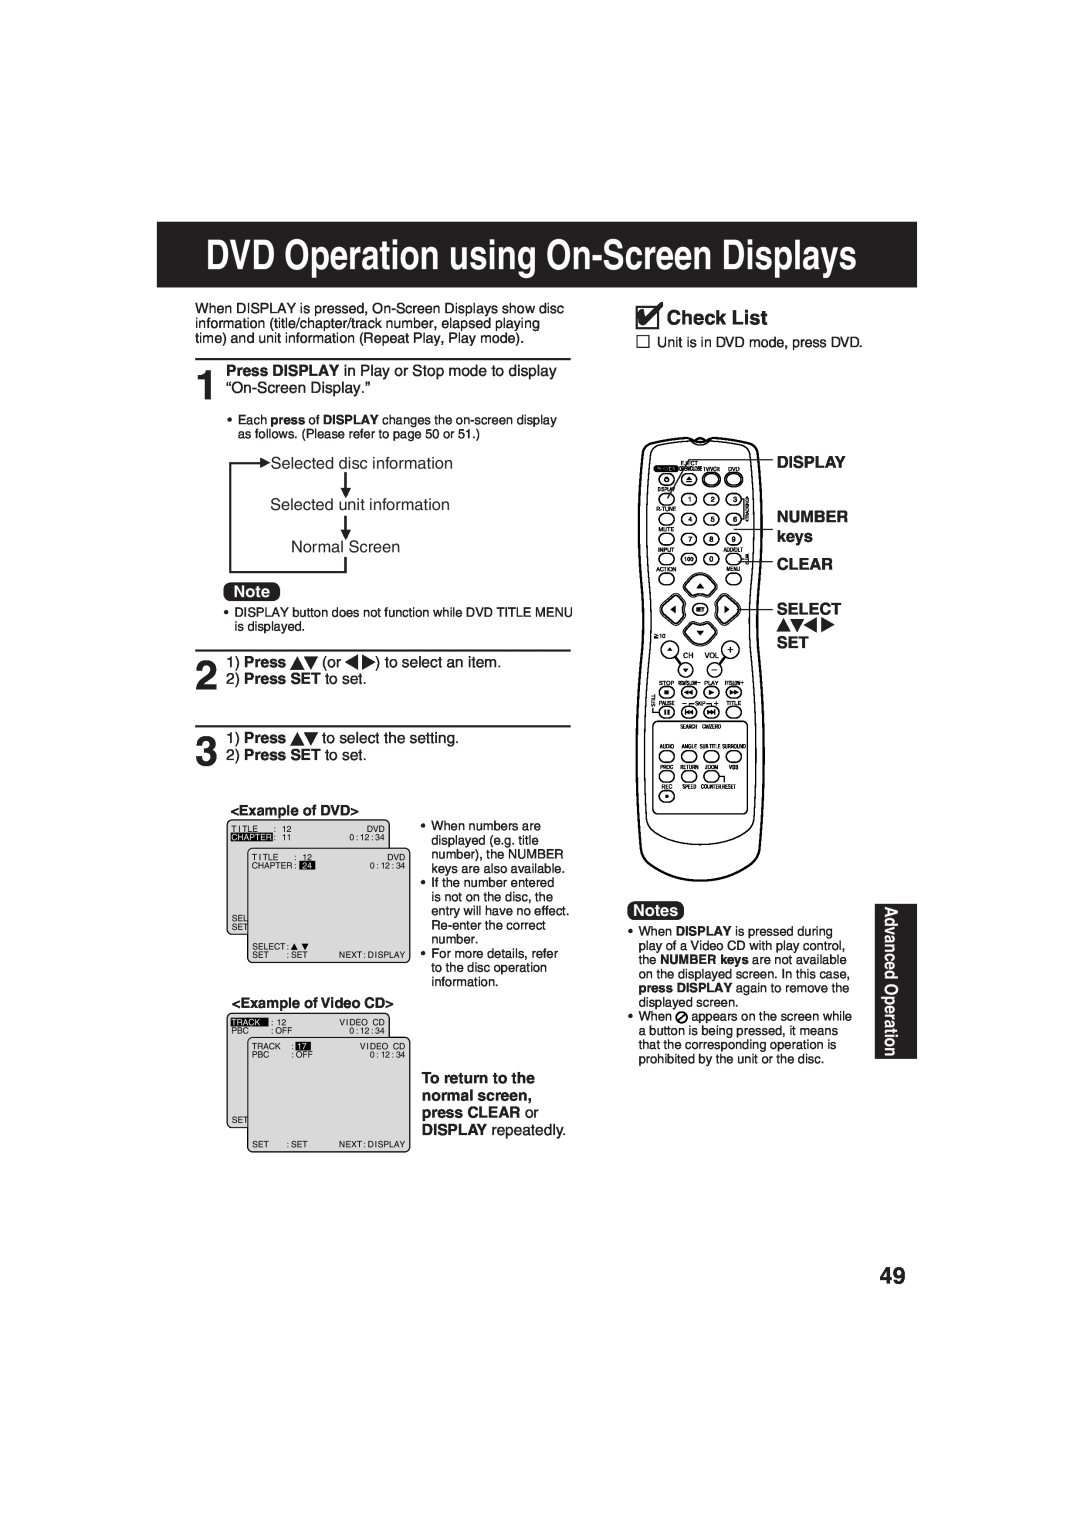 Panasonic PV-DF273 manual DVD Operation using On-Screen Displays, DISPLAY NUMBER keys CLEAR SELECT SET, Check List, Press 